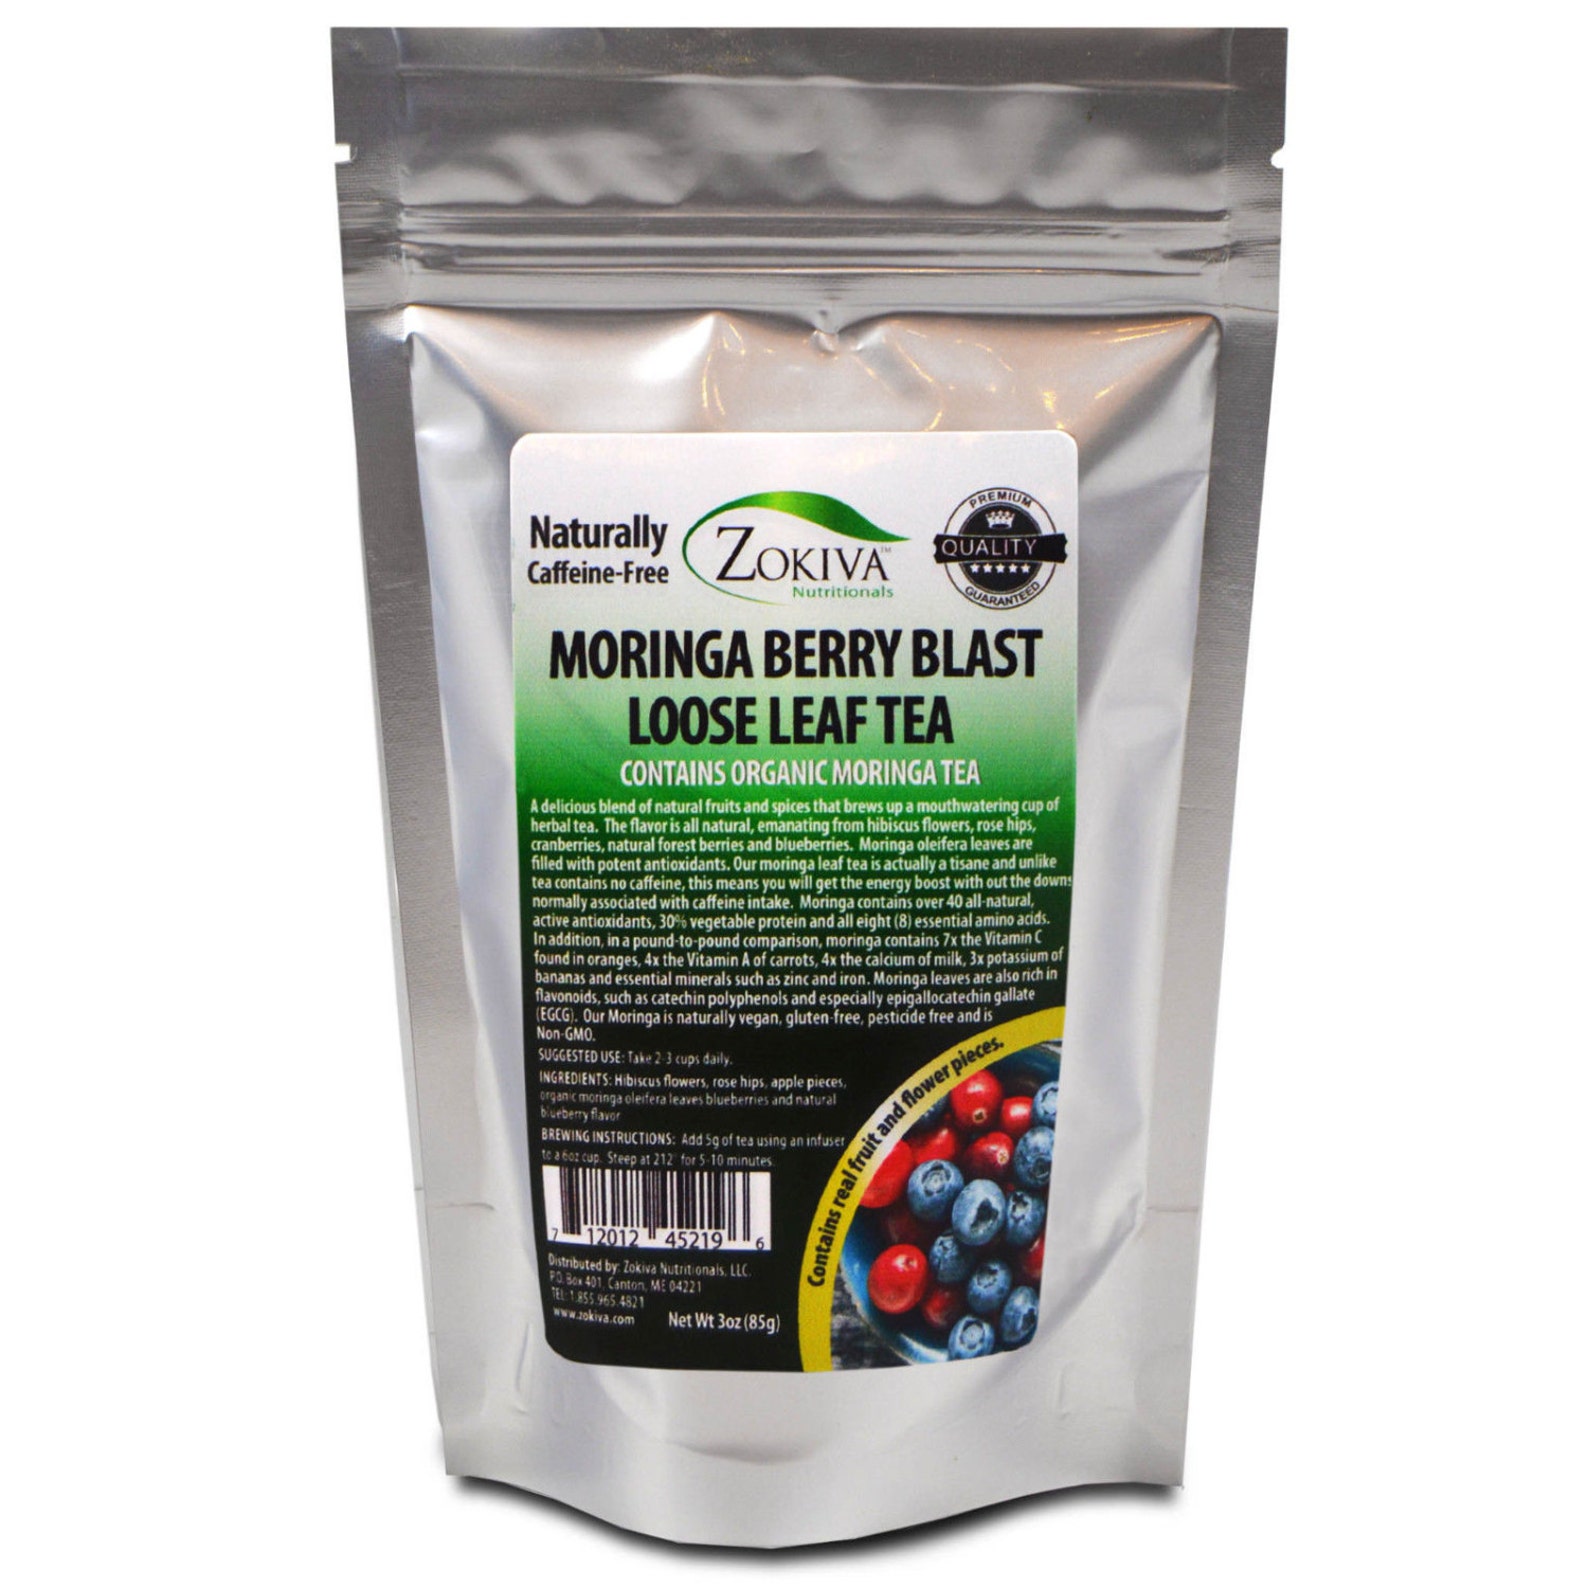 Berry Delicious Loose Leaf Tea